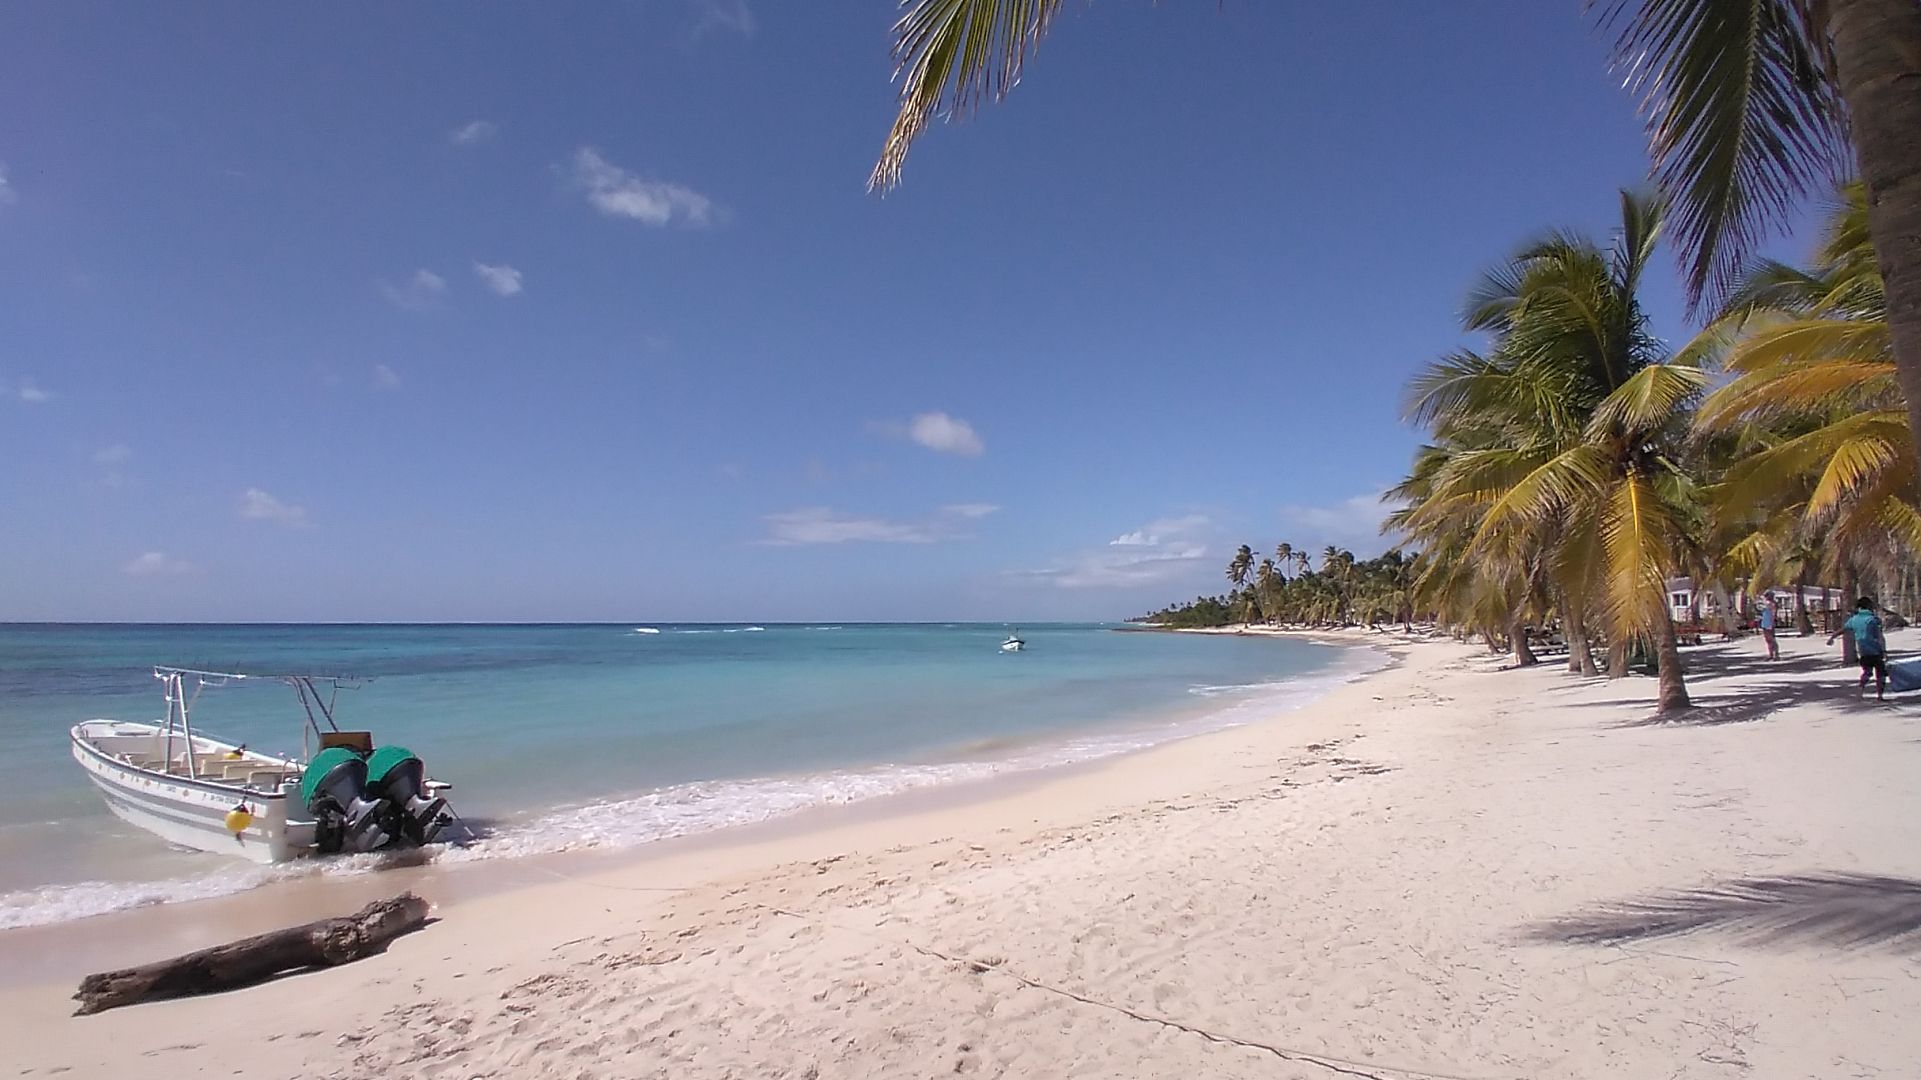 Saona Island: A Paradise Short Distance from Punta Cana